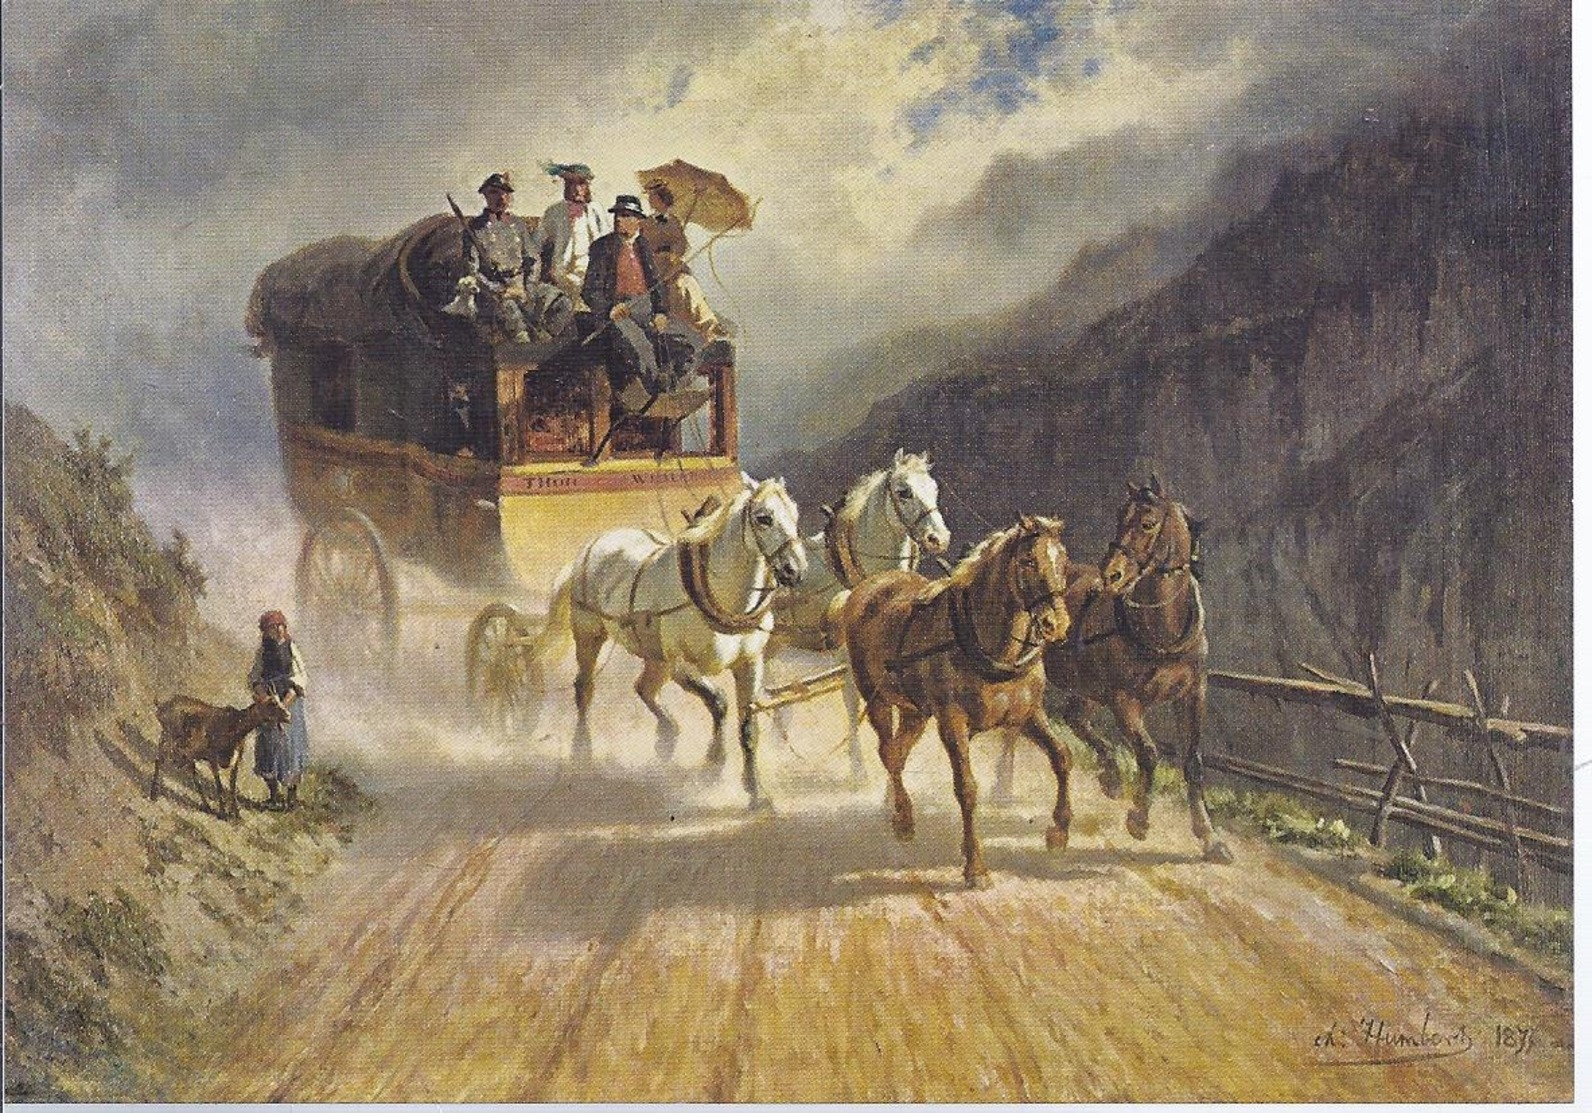 AK-div.32- 61588 - Schweiz -Charles Humbert  - Gemälde Simmentalpost - Postkutsche - Paintings